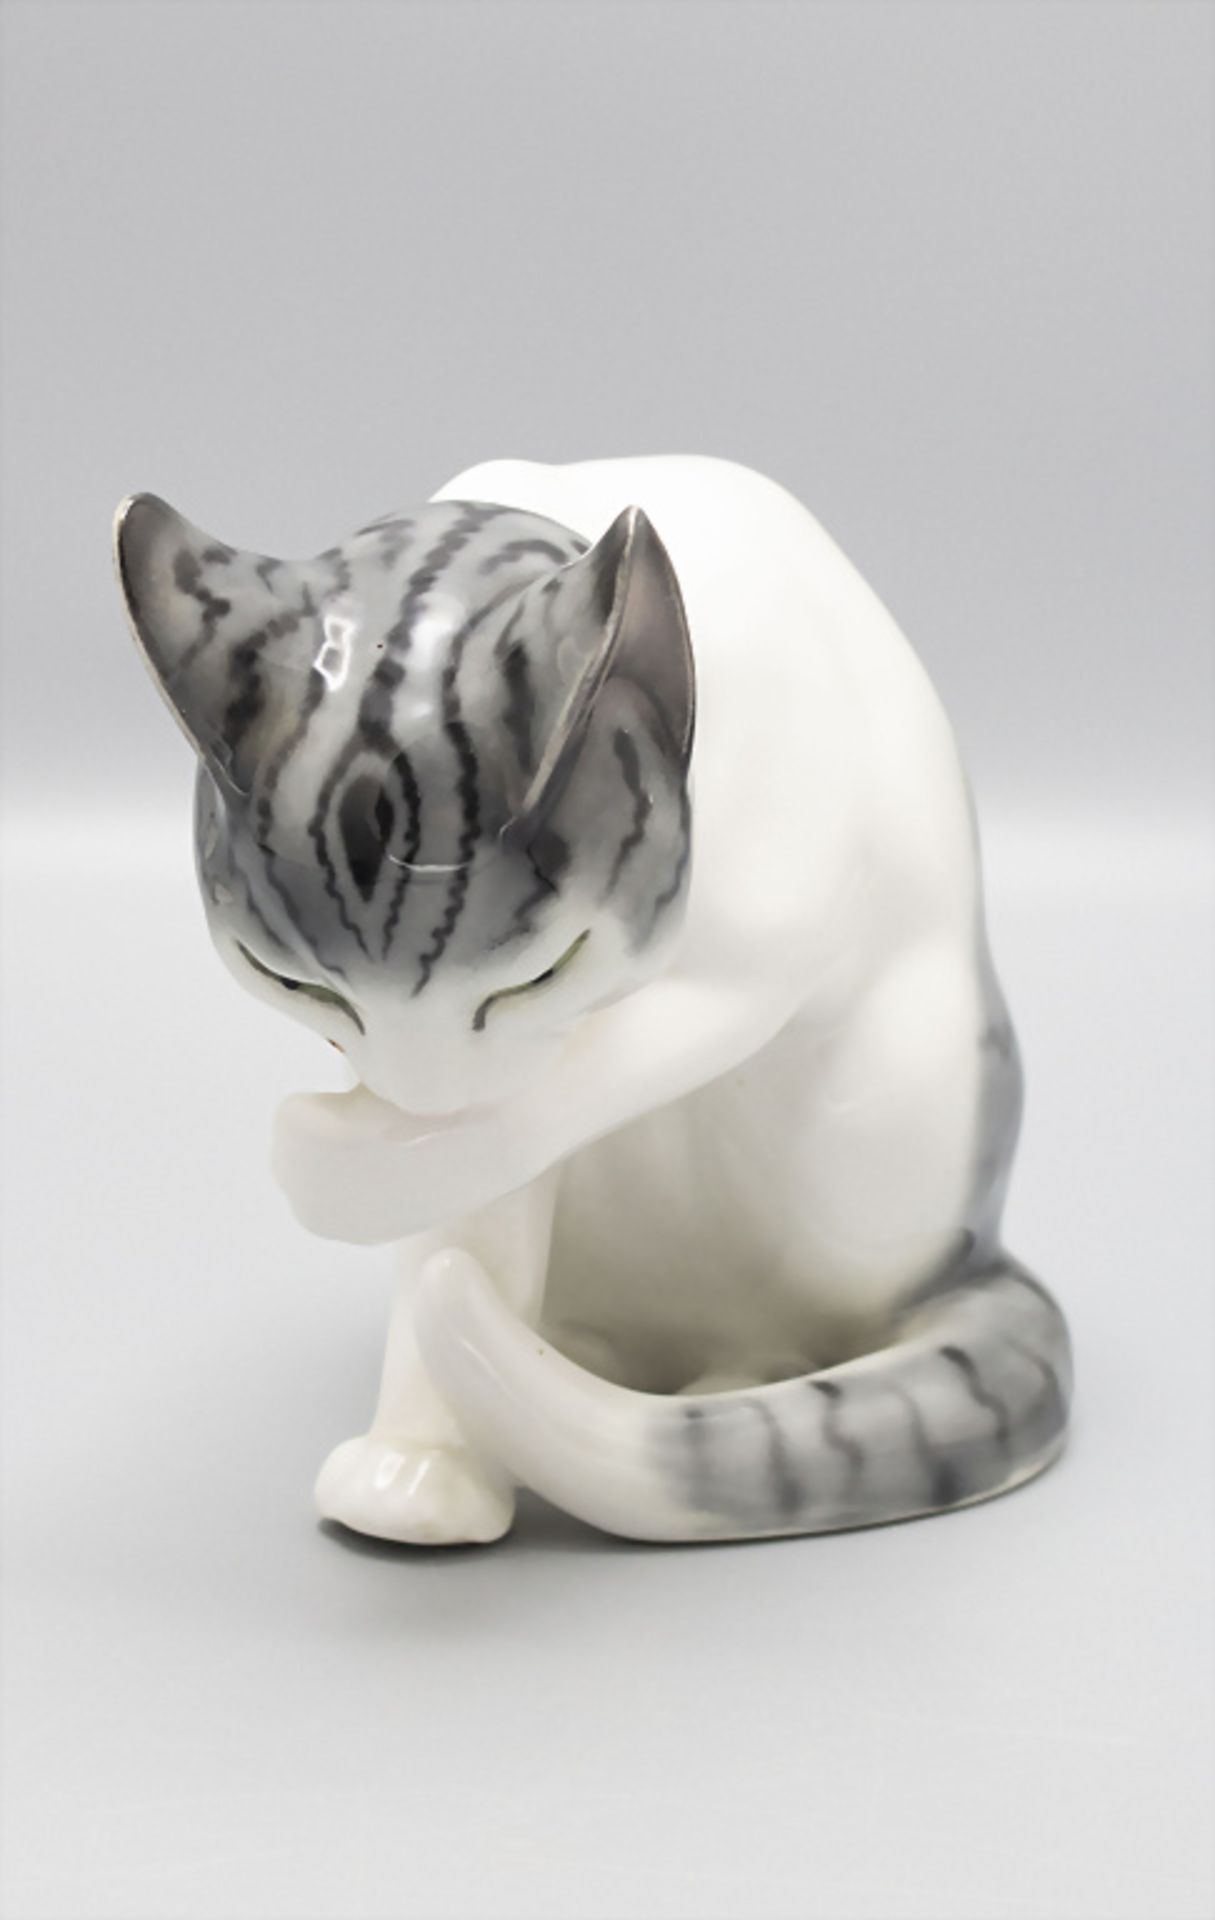 Tierfigur 'Katzenwäsche' / A procelain animal figure 'cat's lick', E. Pfeffer, Gotha, um 1930 - Image 5 of 8